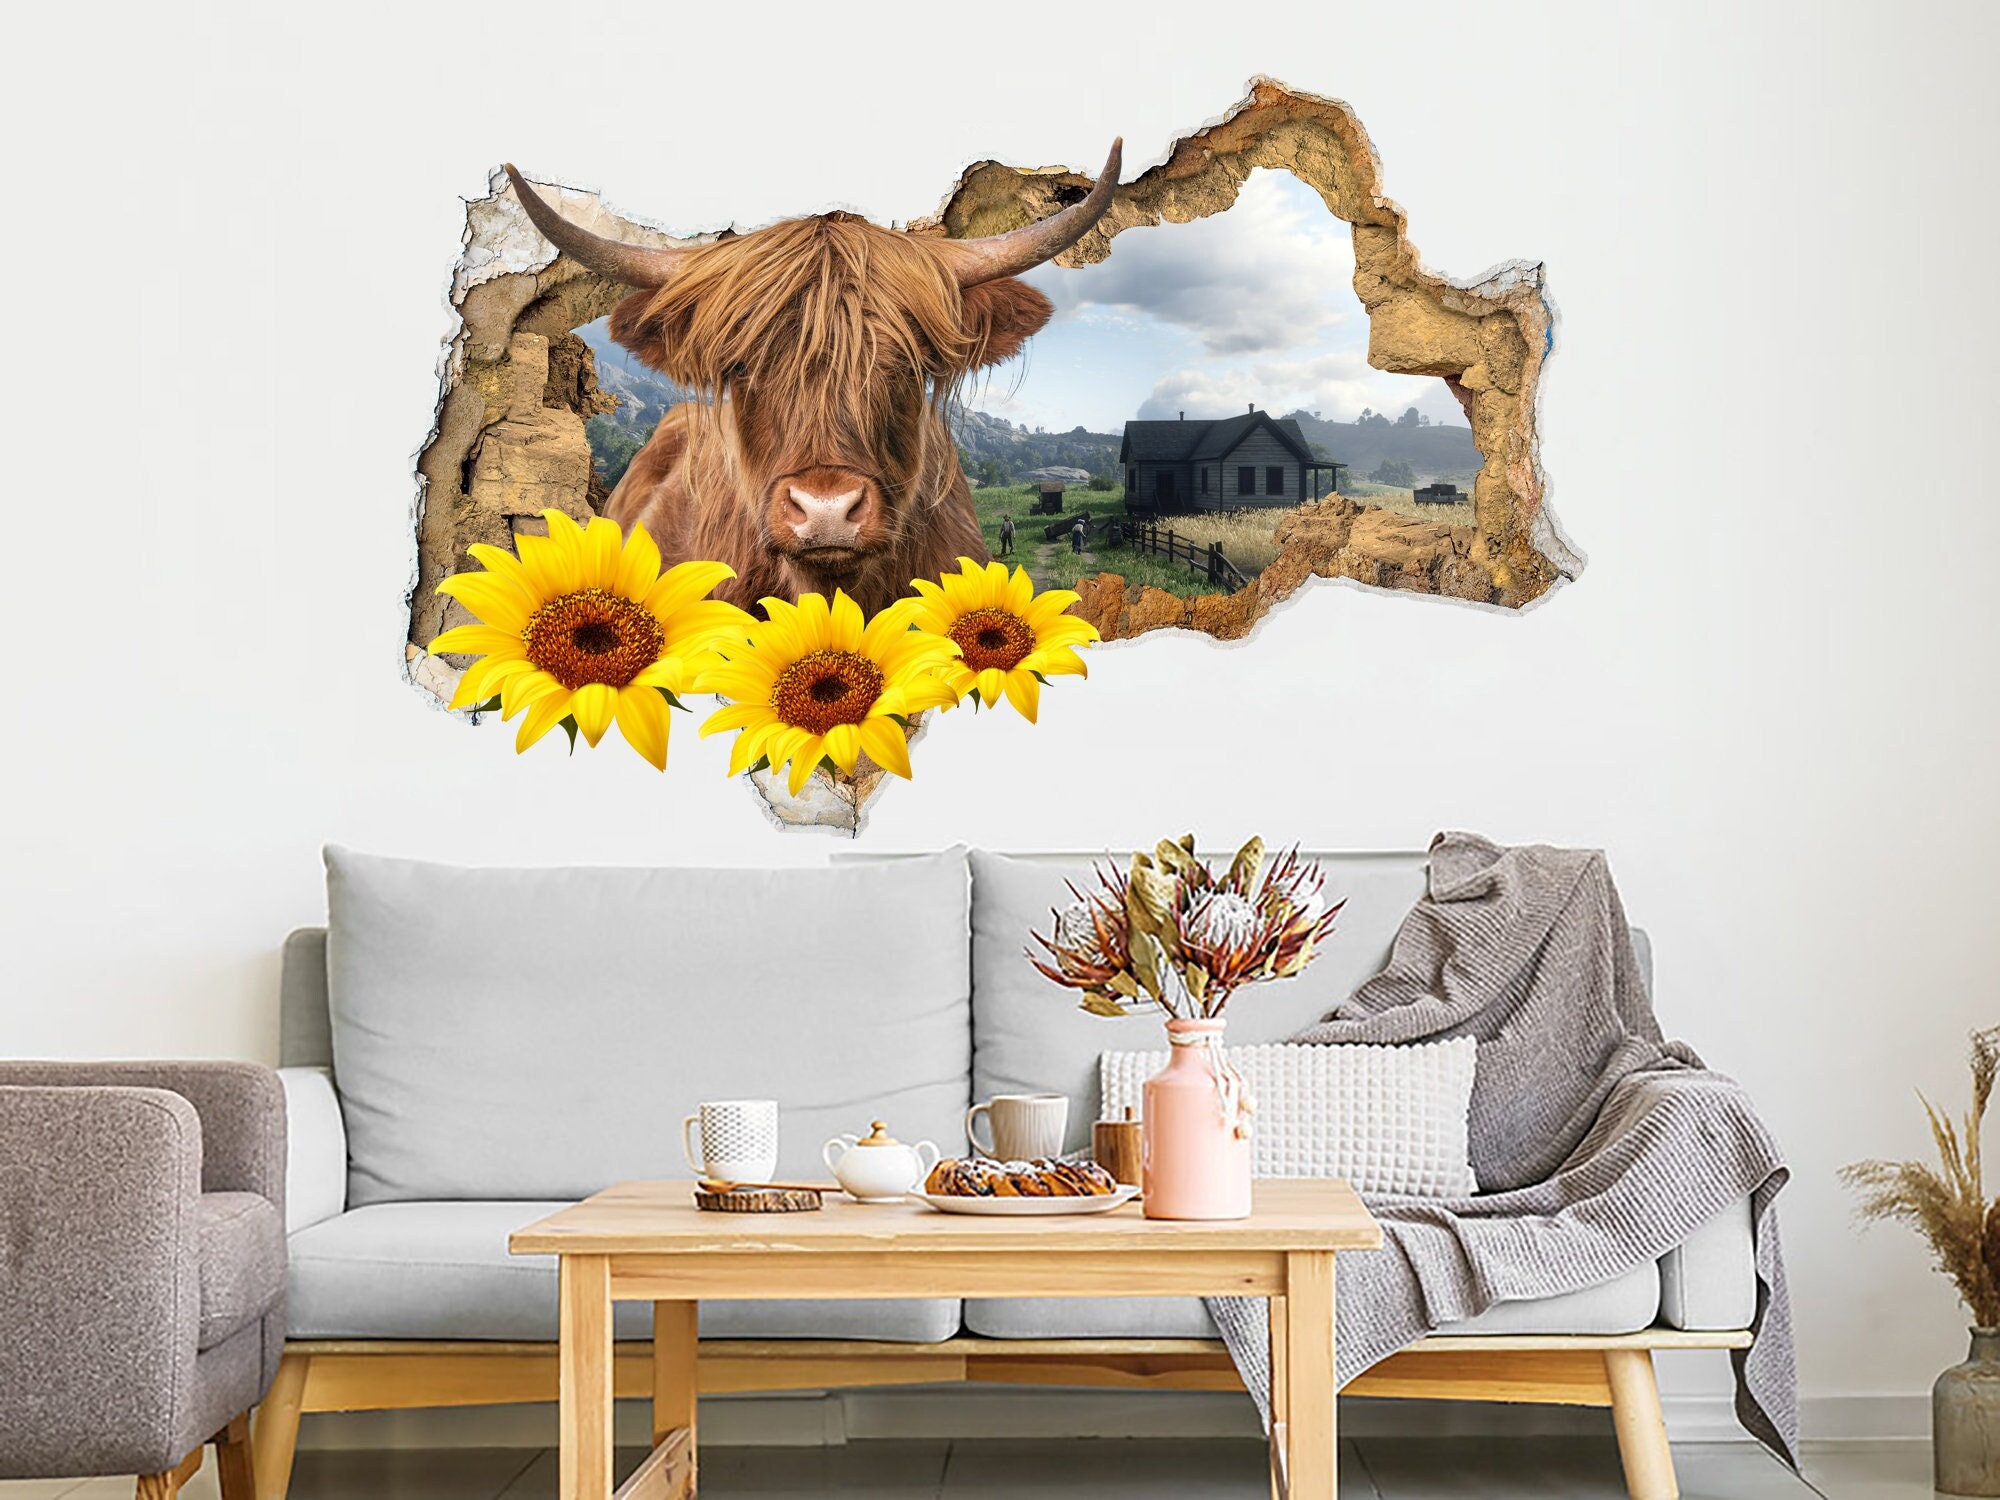 Highland cow wallpaper nursery decor, farm nursery peel and stick